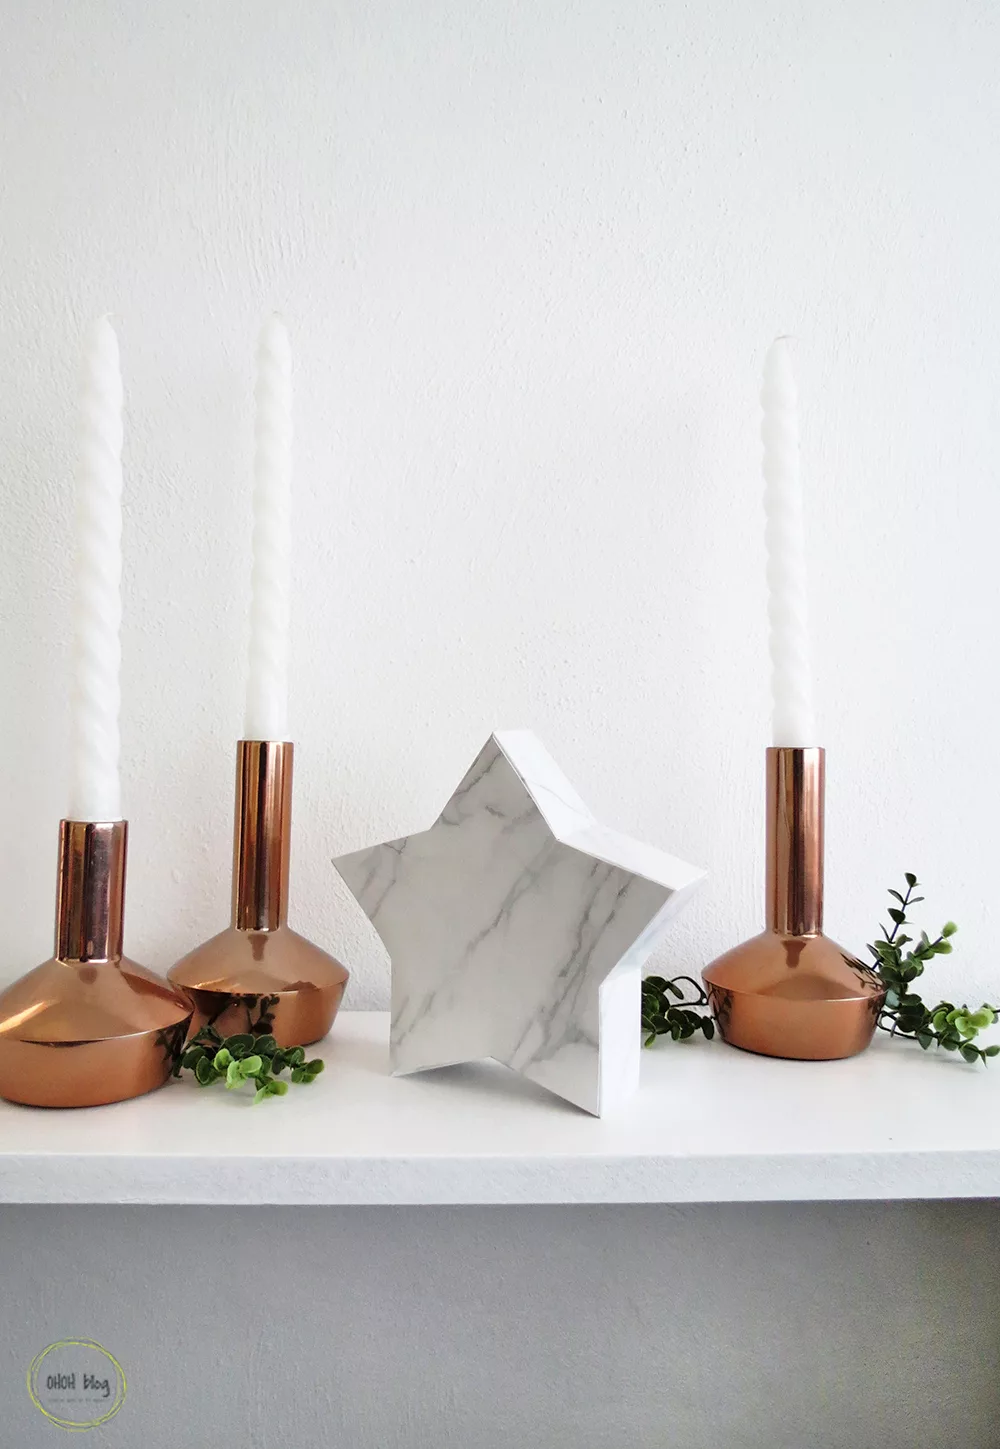 How to create a DIY scandinavian Christmas decor